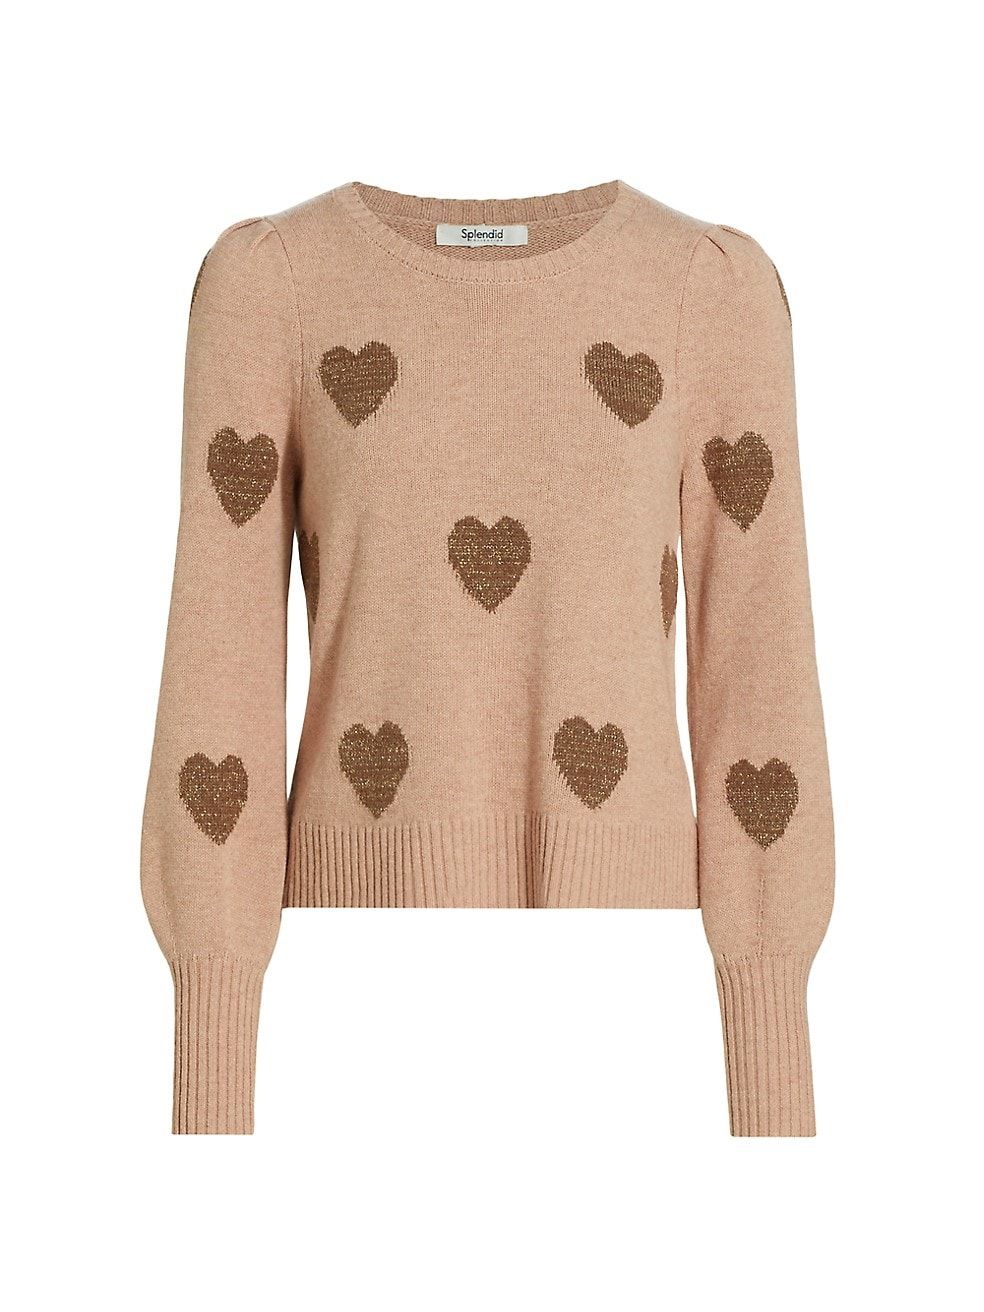 Splendid Annabelle Glittery-Heart Sweater | Saks Fifth Avenue